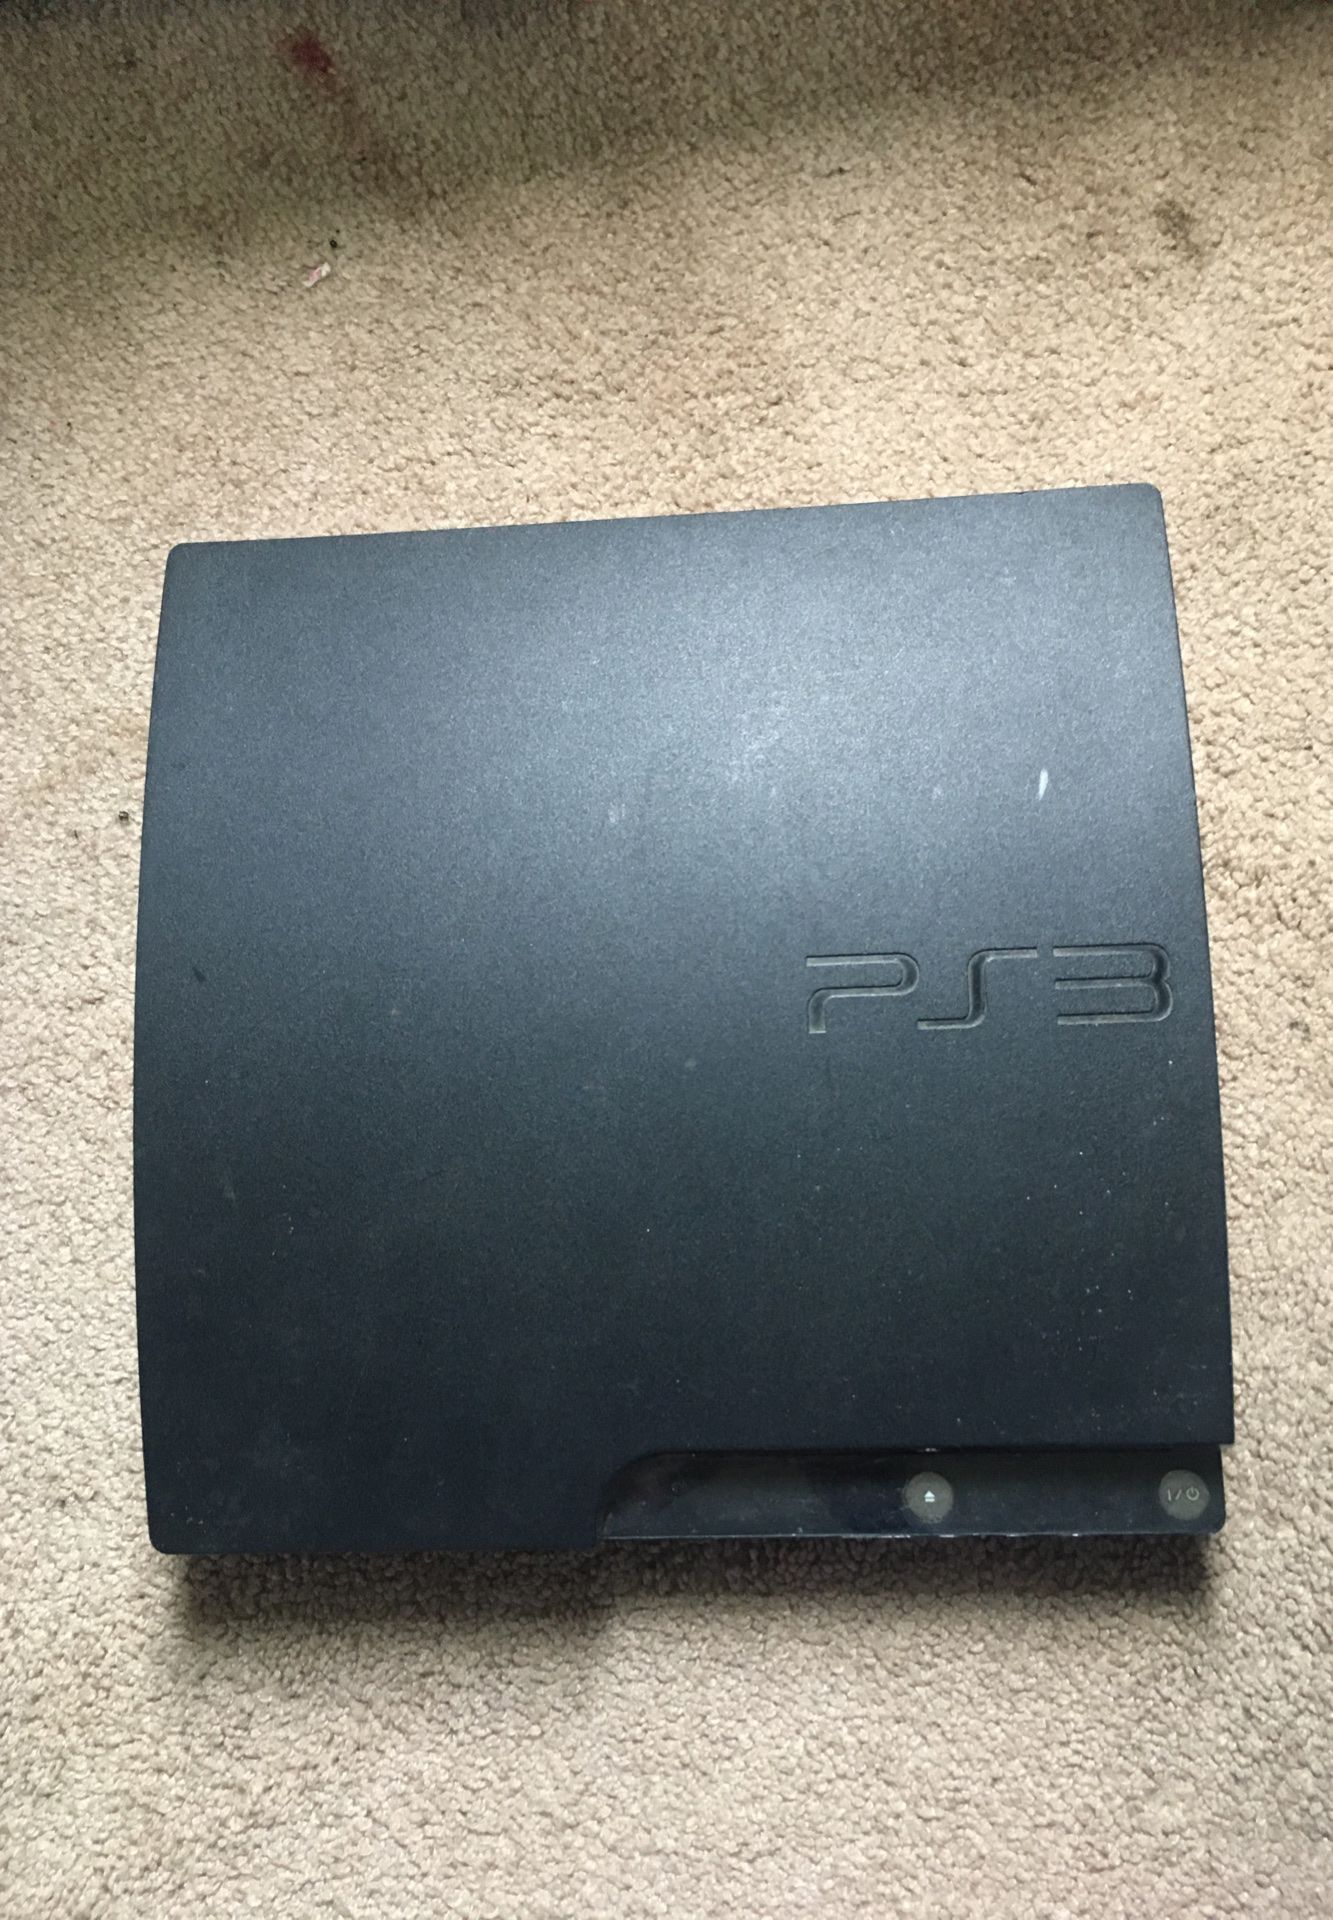 Sony PlayStation 3 Slim 120 GB Charcoal Black Console (NTSC - CECH-2001A)